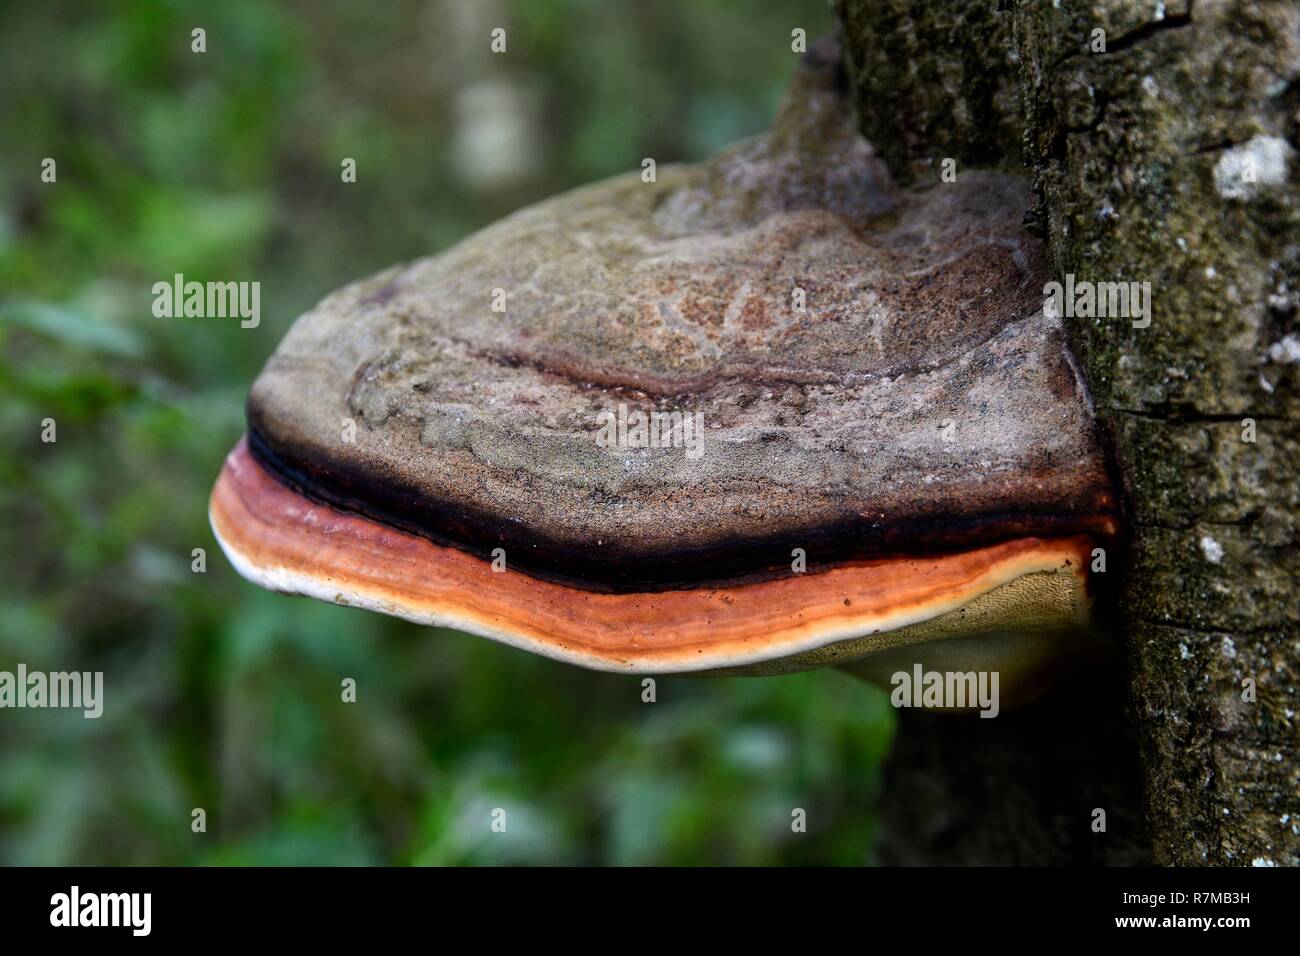 France, Doubs, mushroom Stock Photo